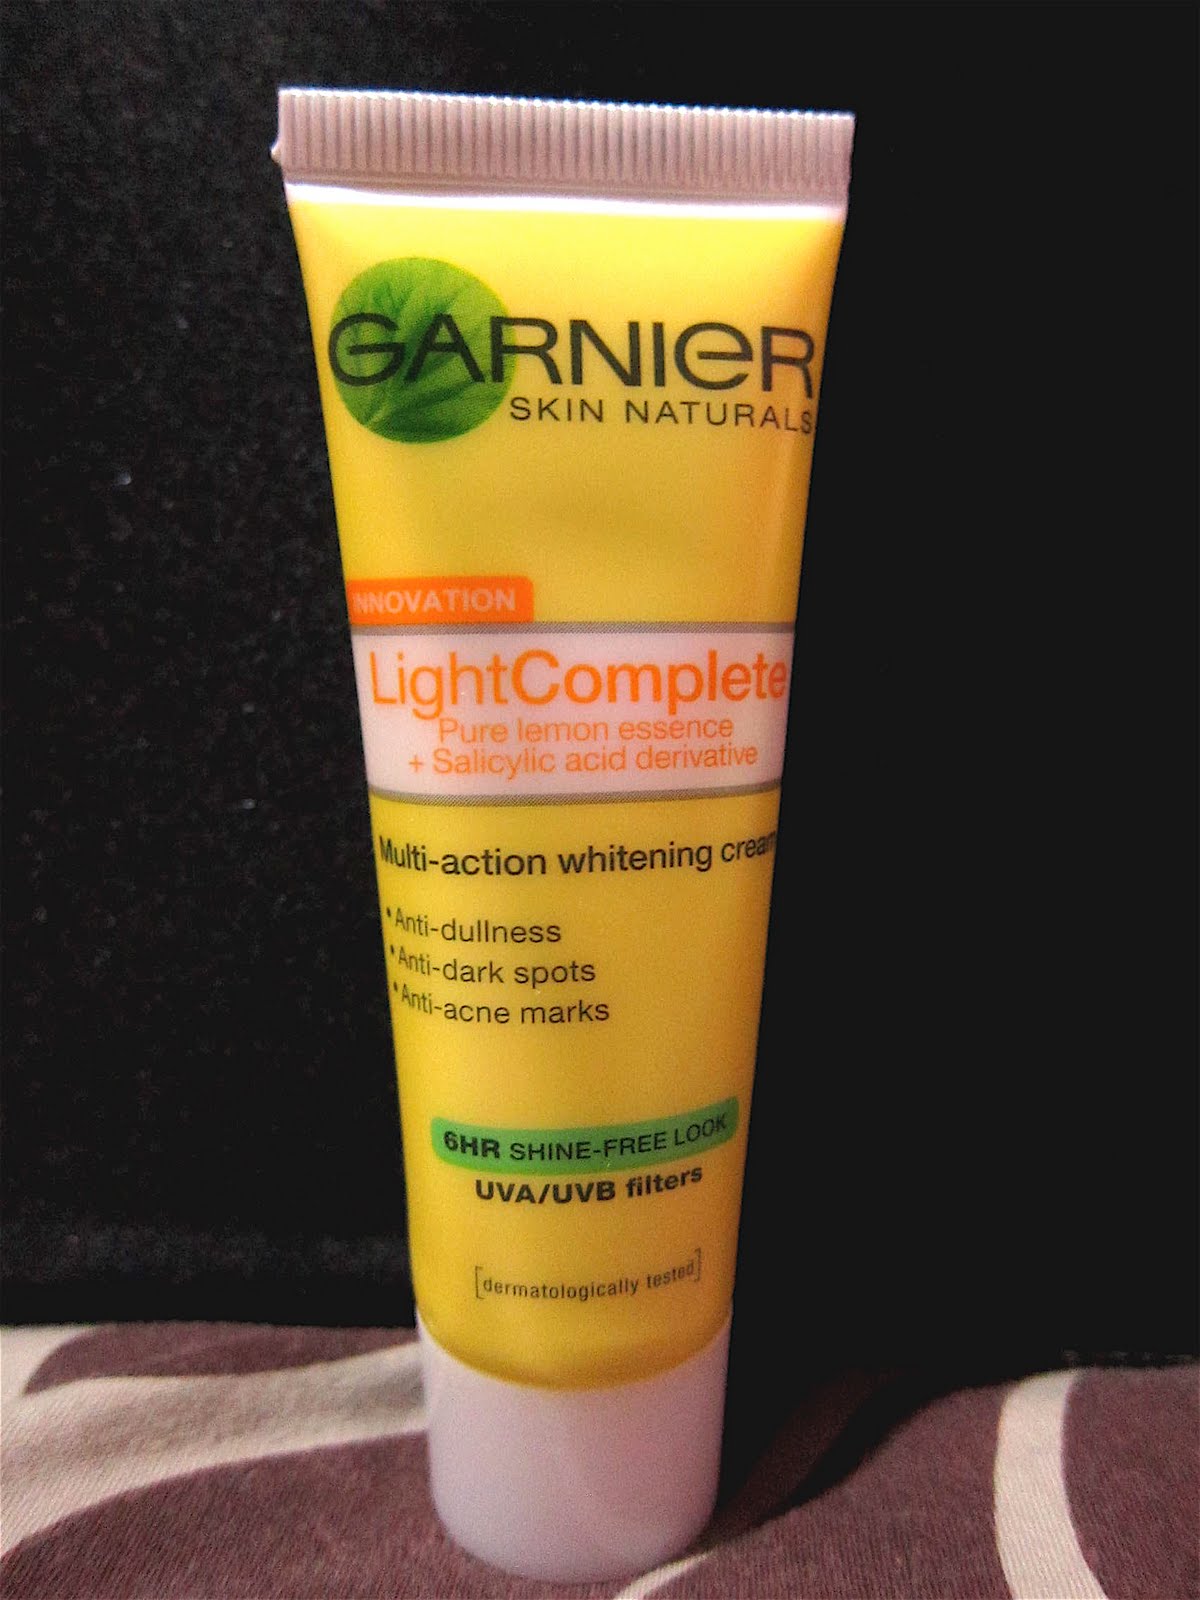 Beauty Junkie i.e Caby: Garnier Light Complete Multi-action whitening cream